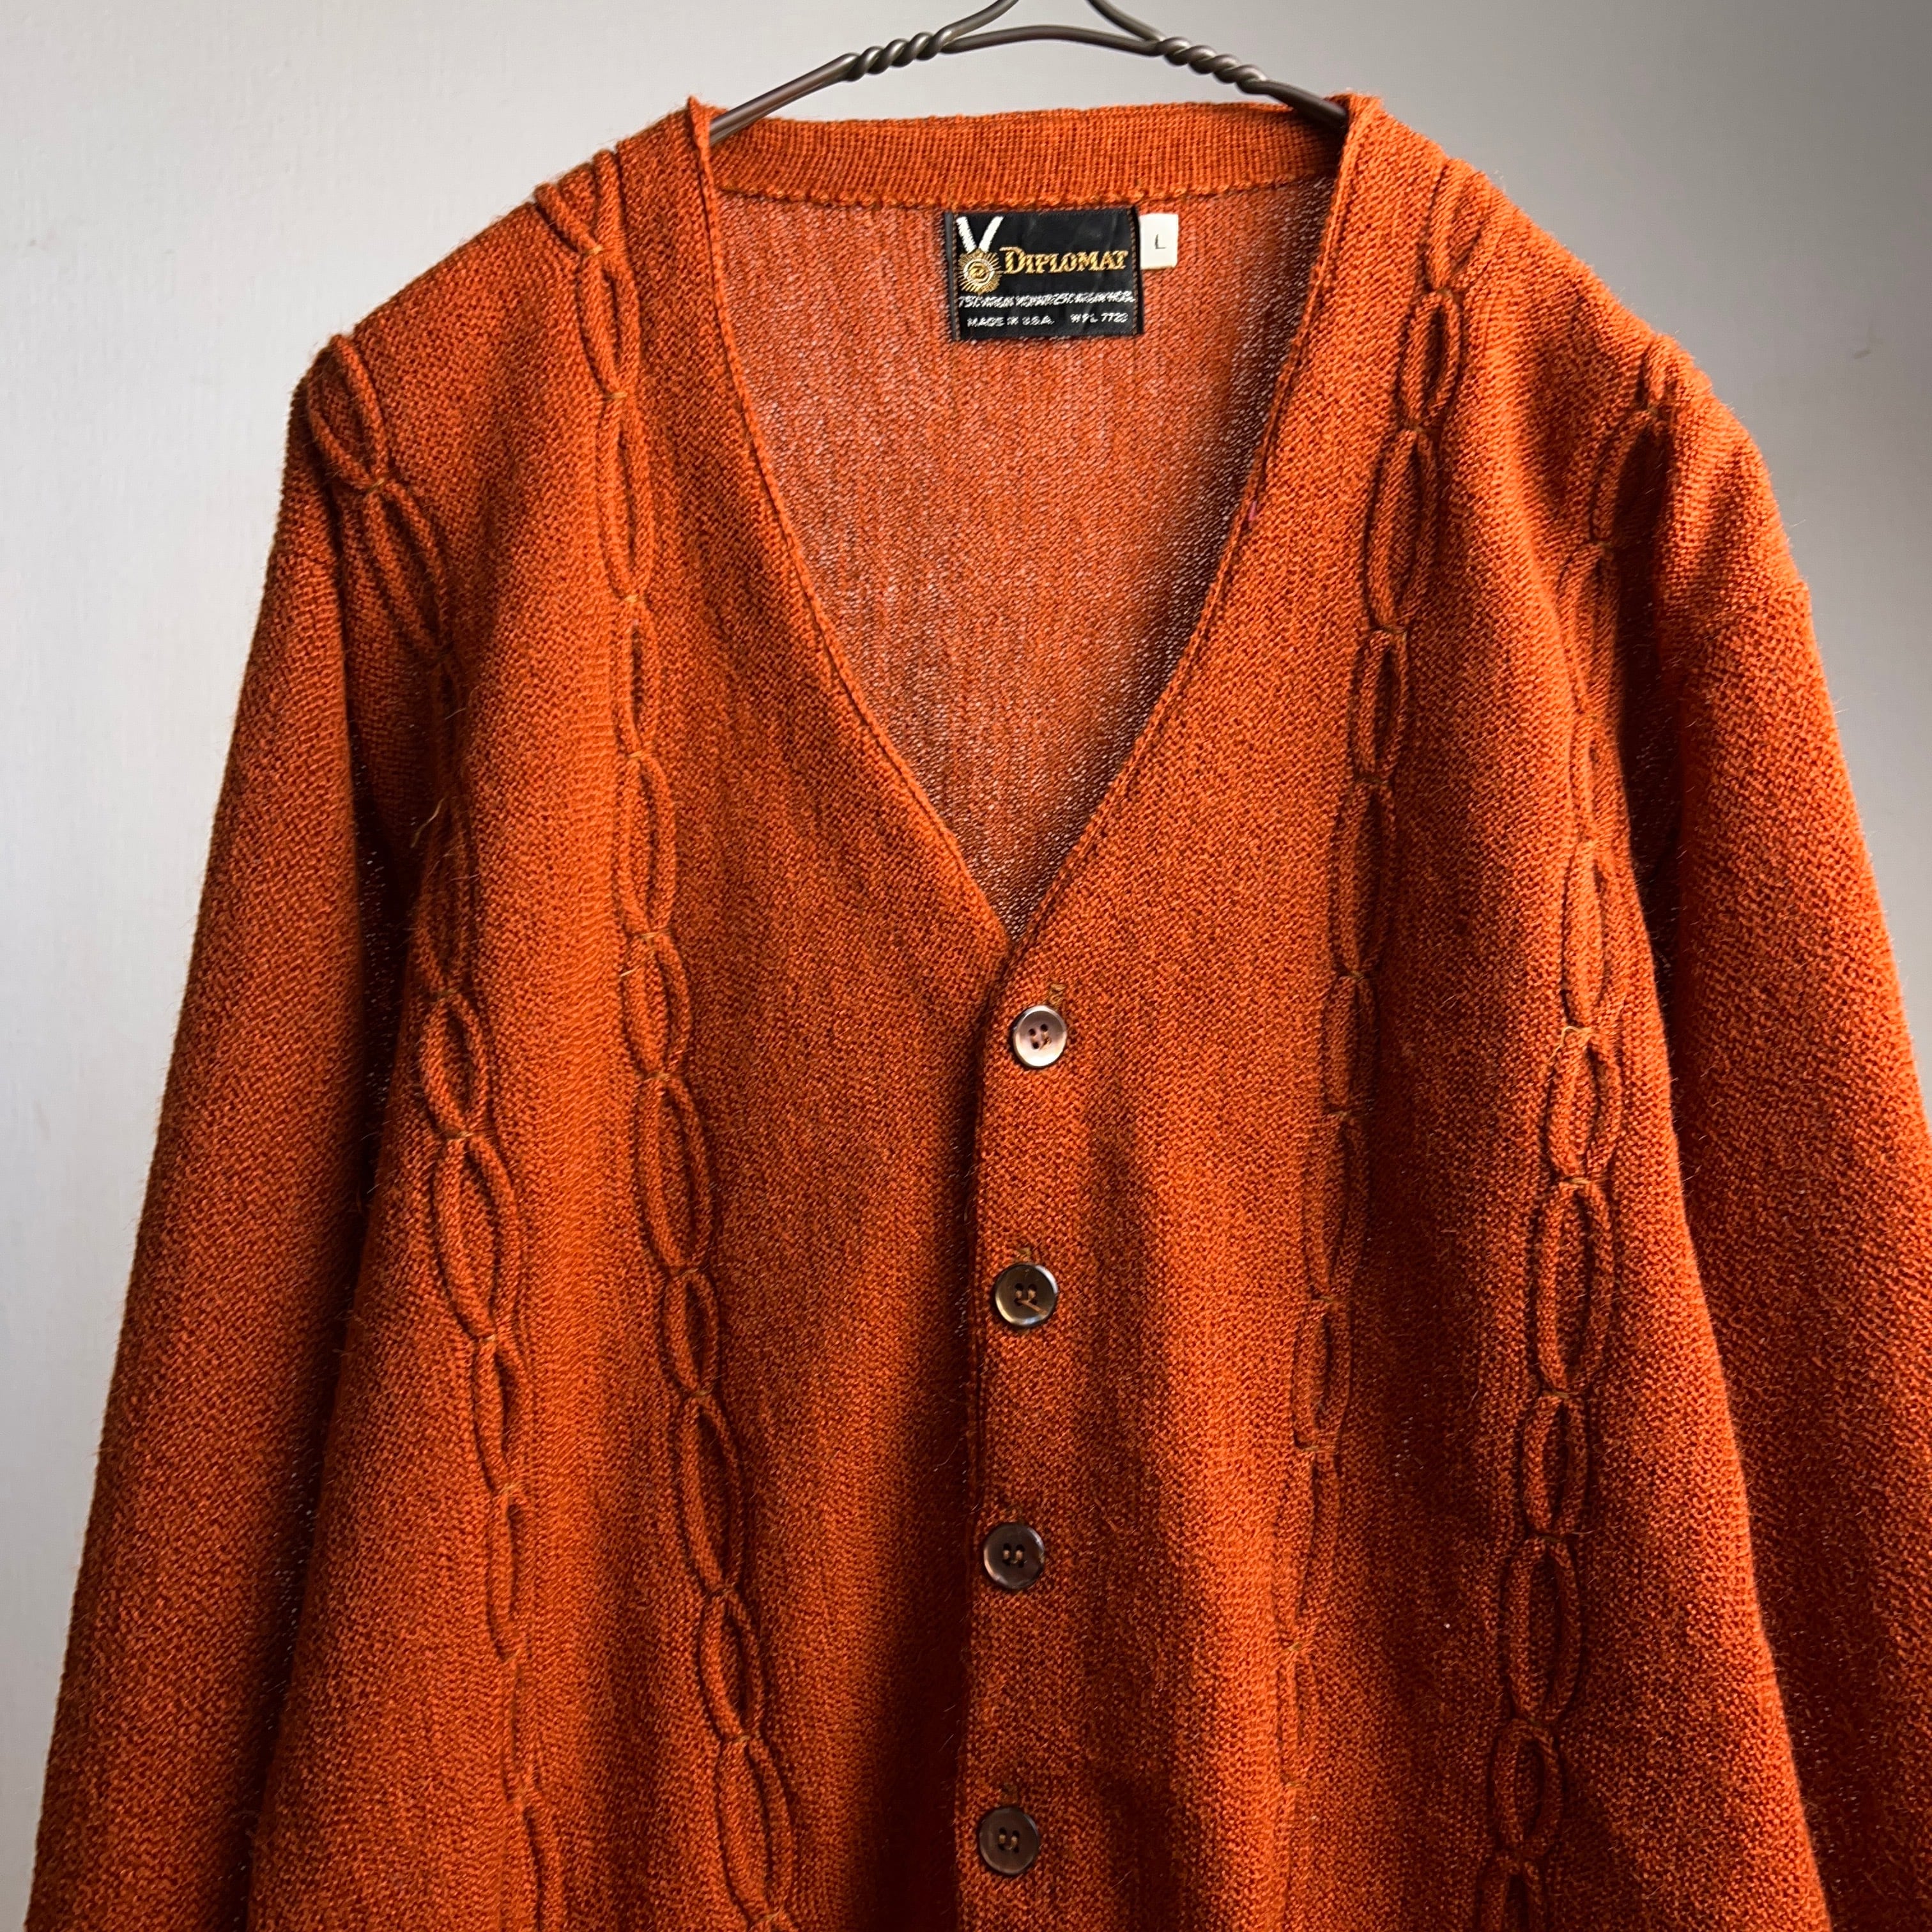 60's DIPLOMAT MOHAIR75% Knit Cardigan USA製 SIZE L 60年代 モヘア 